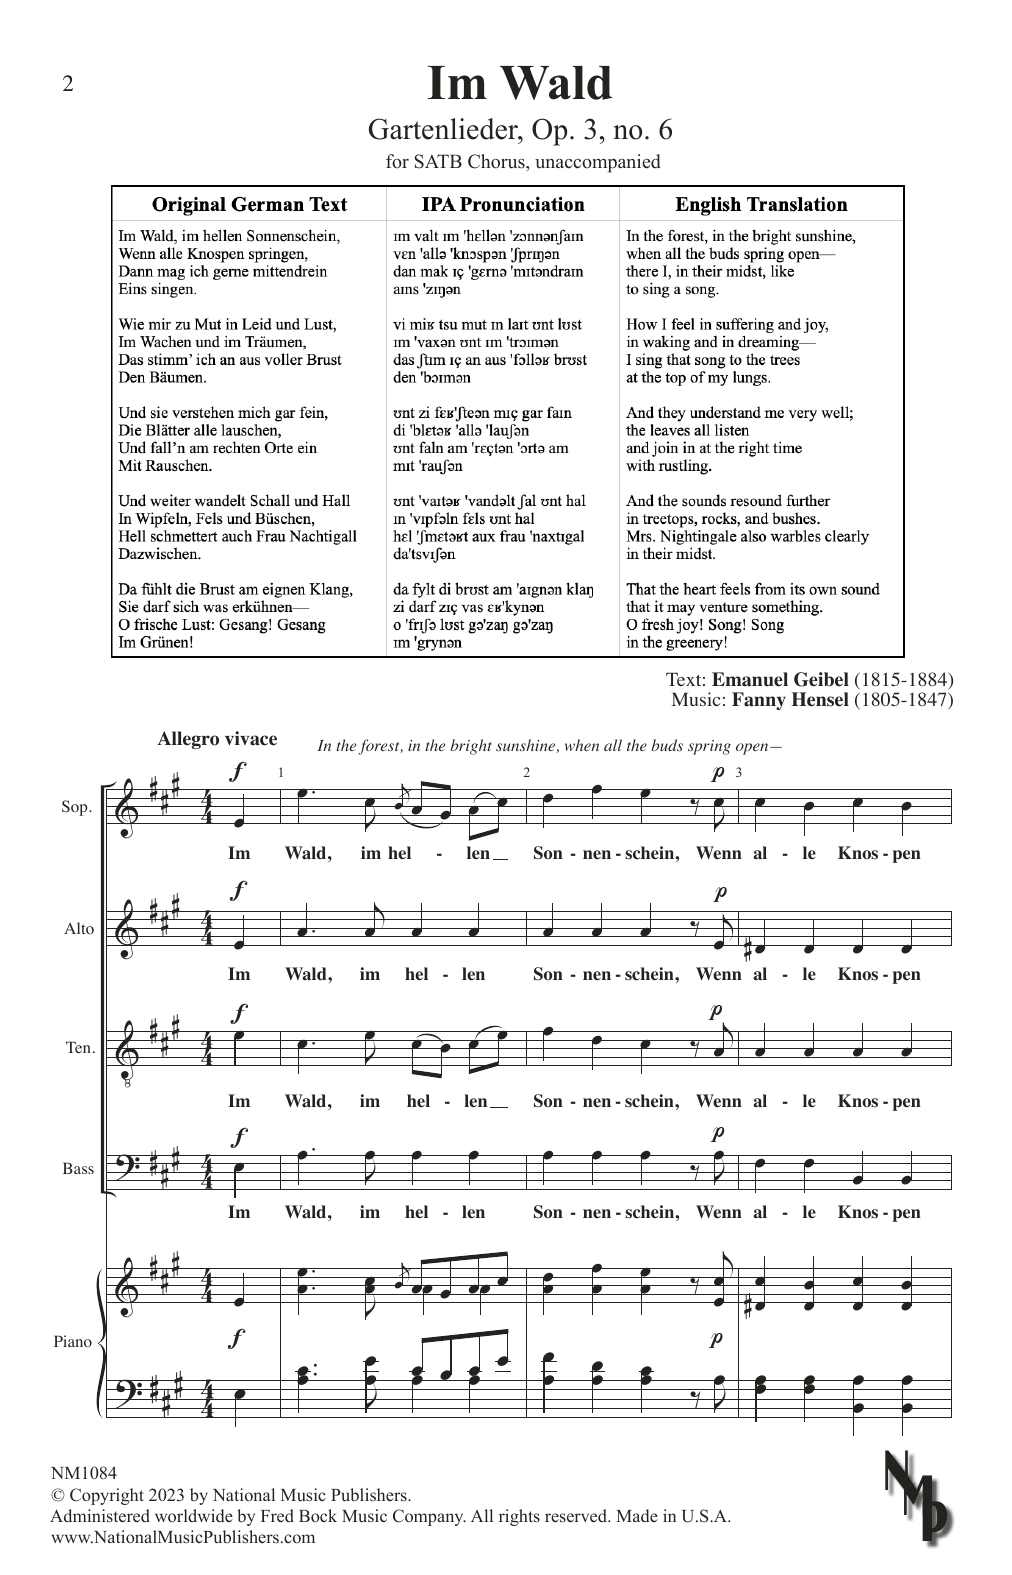 Download Fanny Hensel Im Wald (Gartenlieder, Op. 3, no. 6) Sheet Music